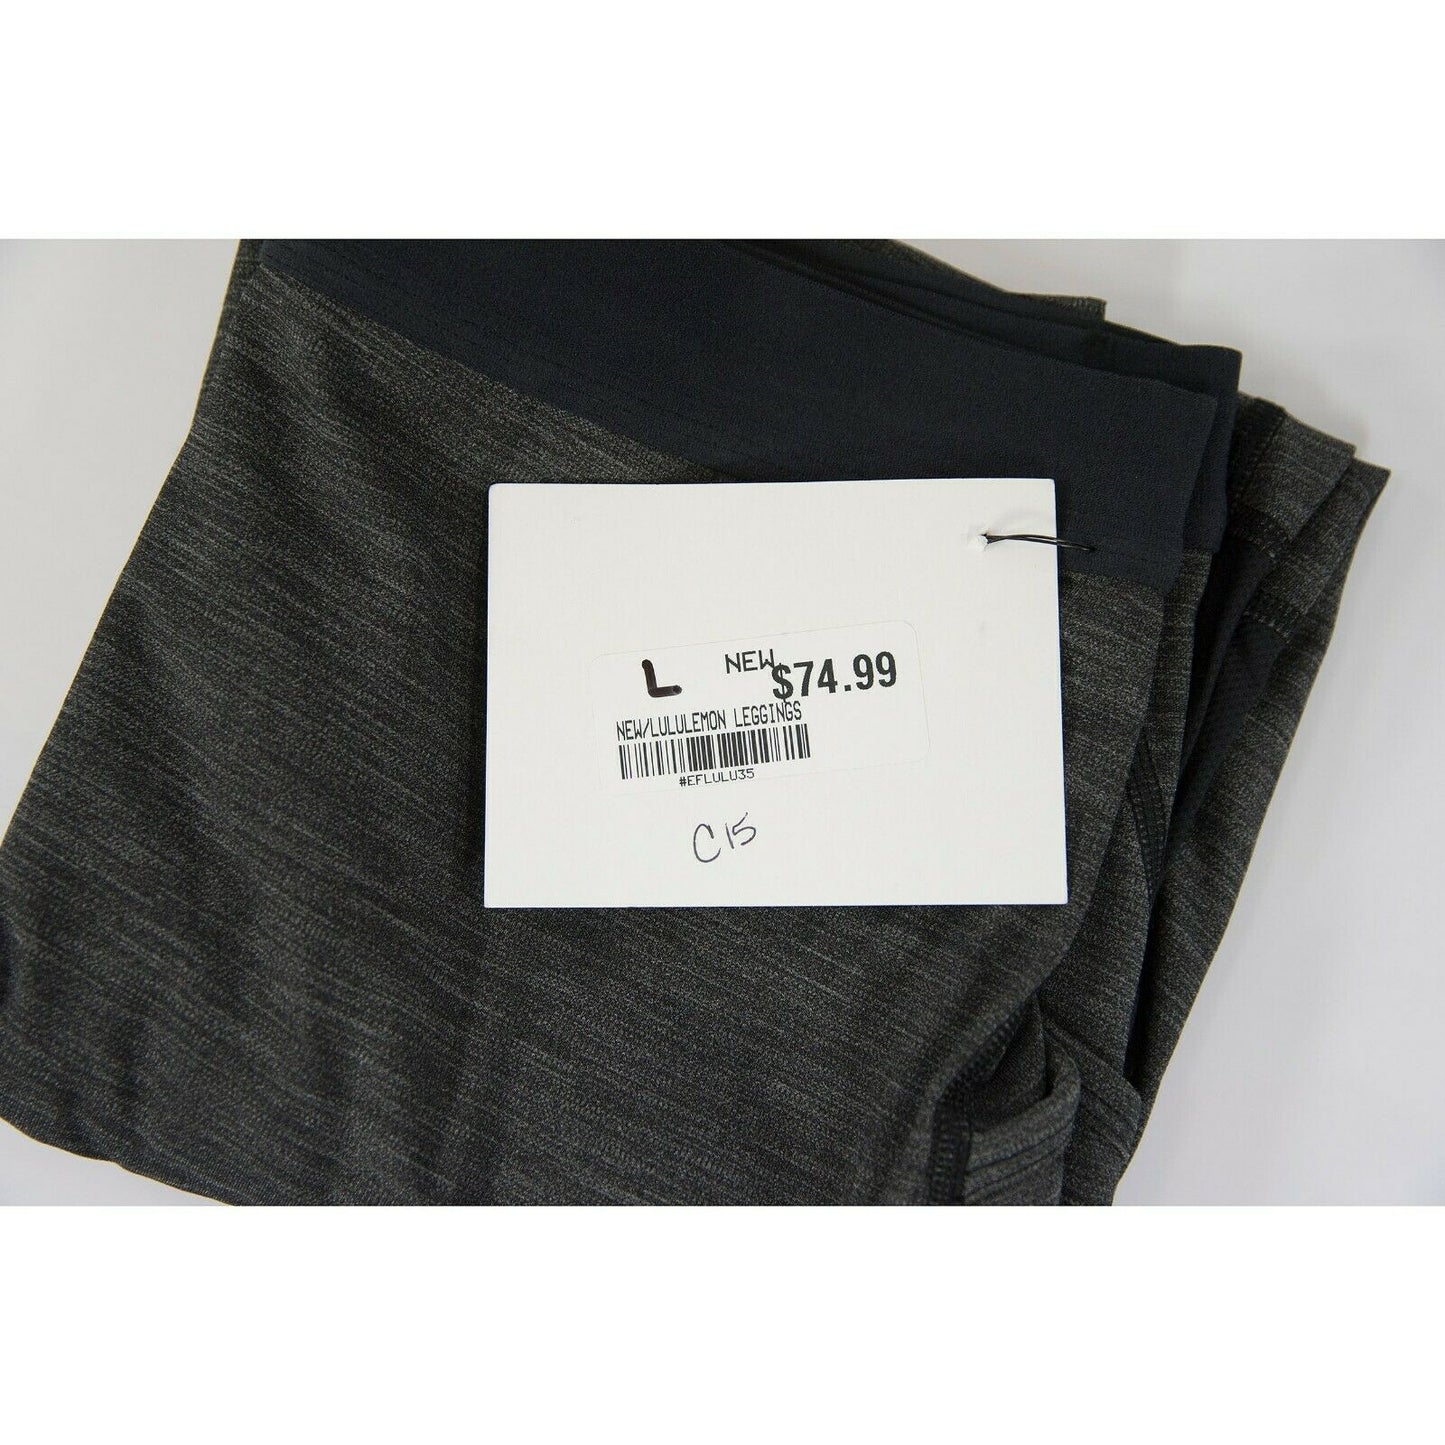 Lululemon Charcoal Grey Space Dye tight leggings NWOT Size L C15